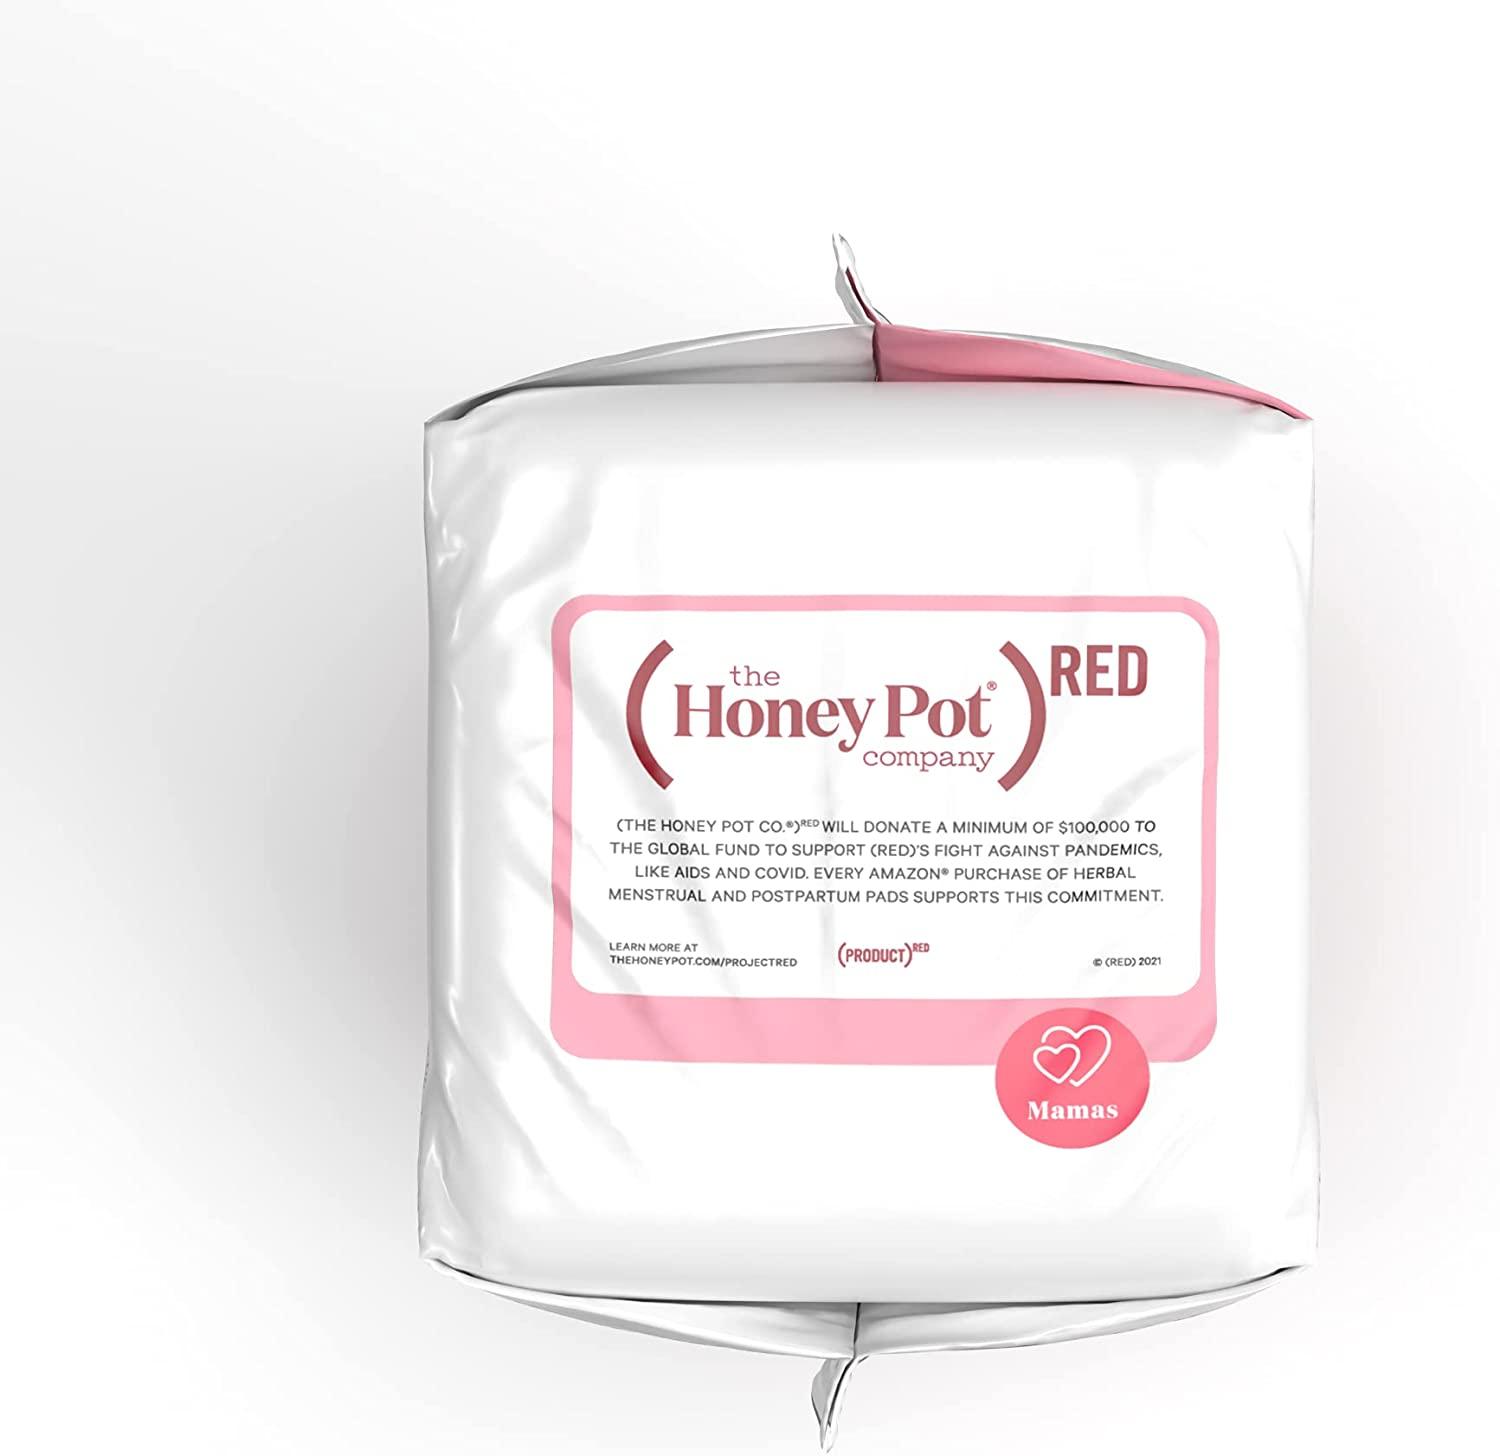 The Honey Pot Postpartum Herbal Pads, 12 Count